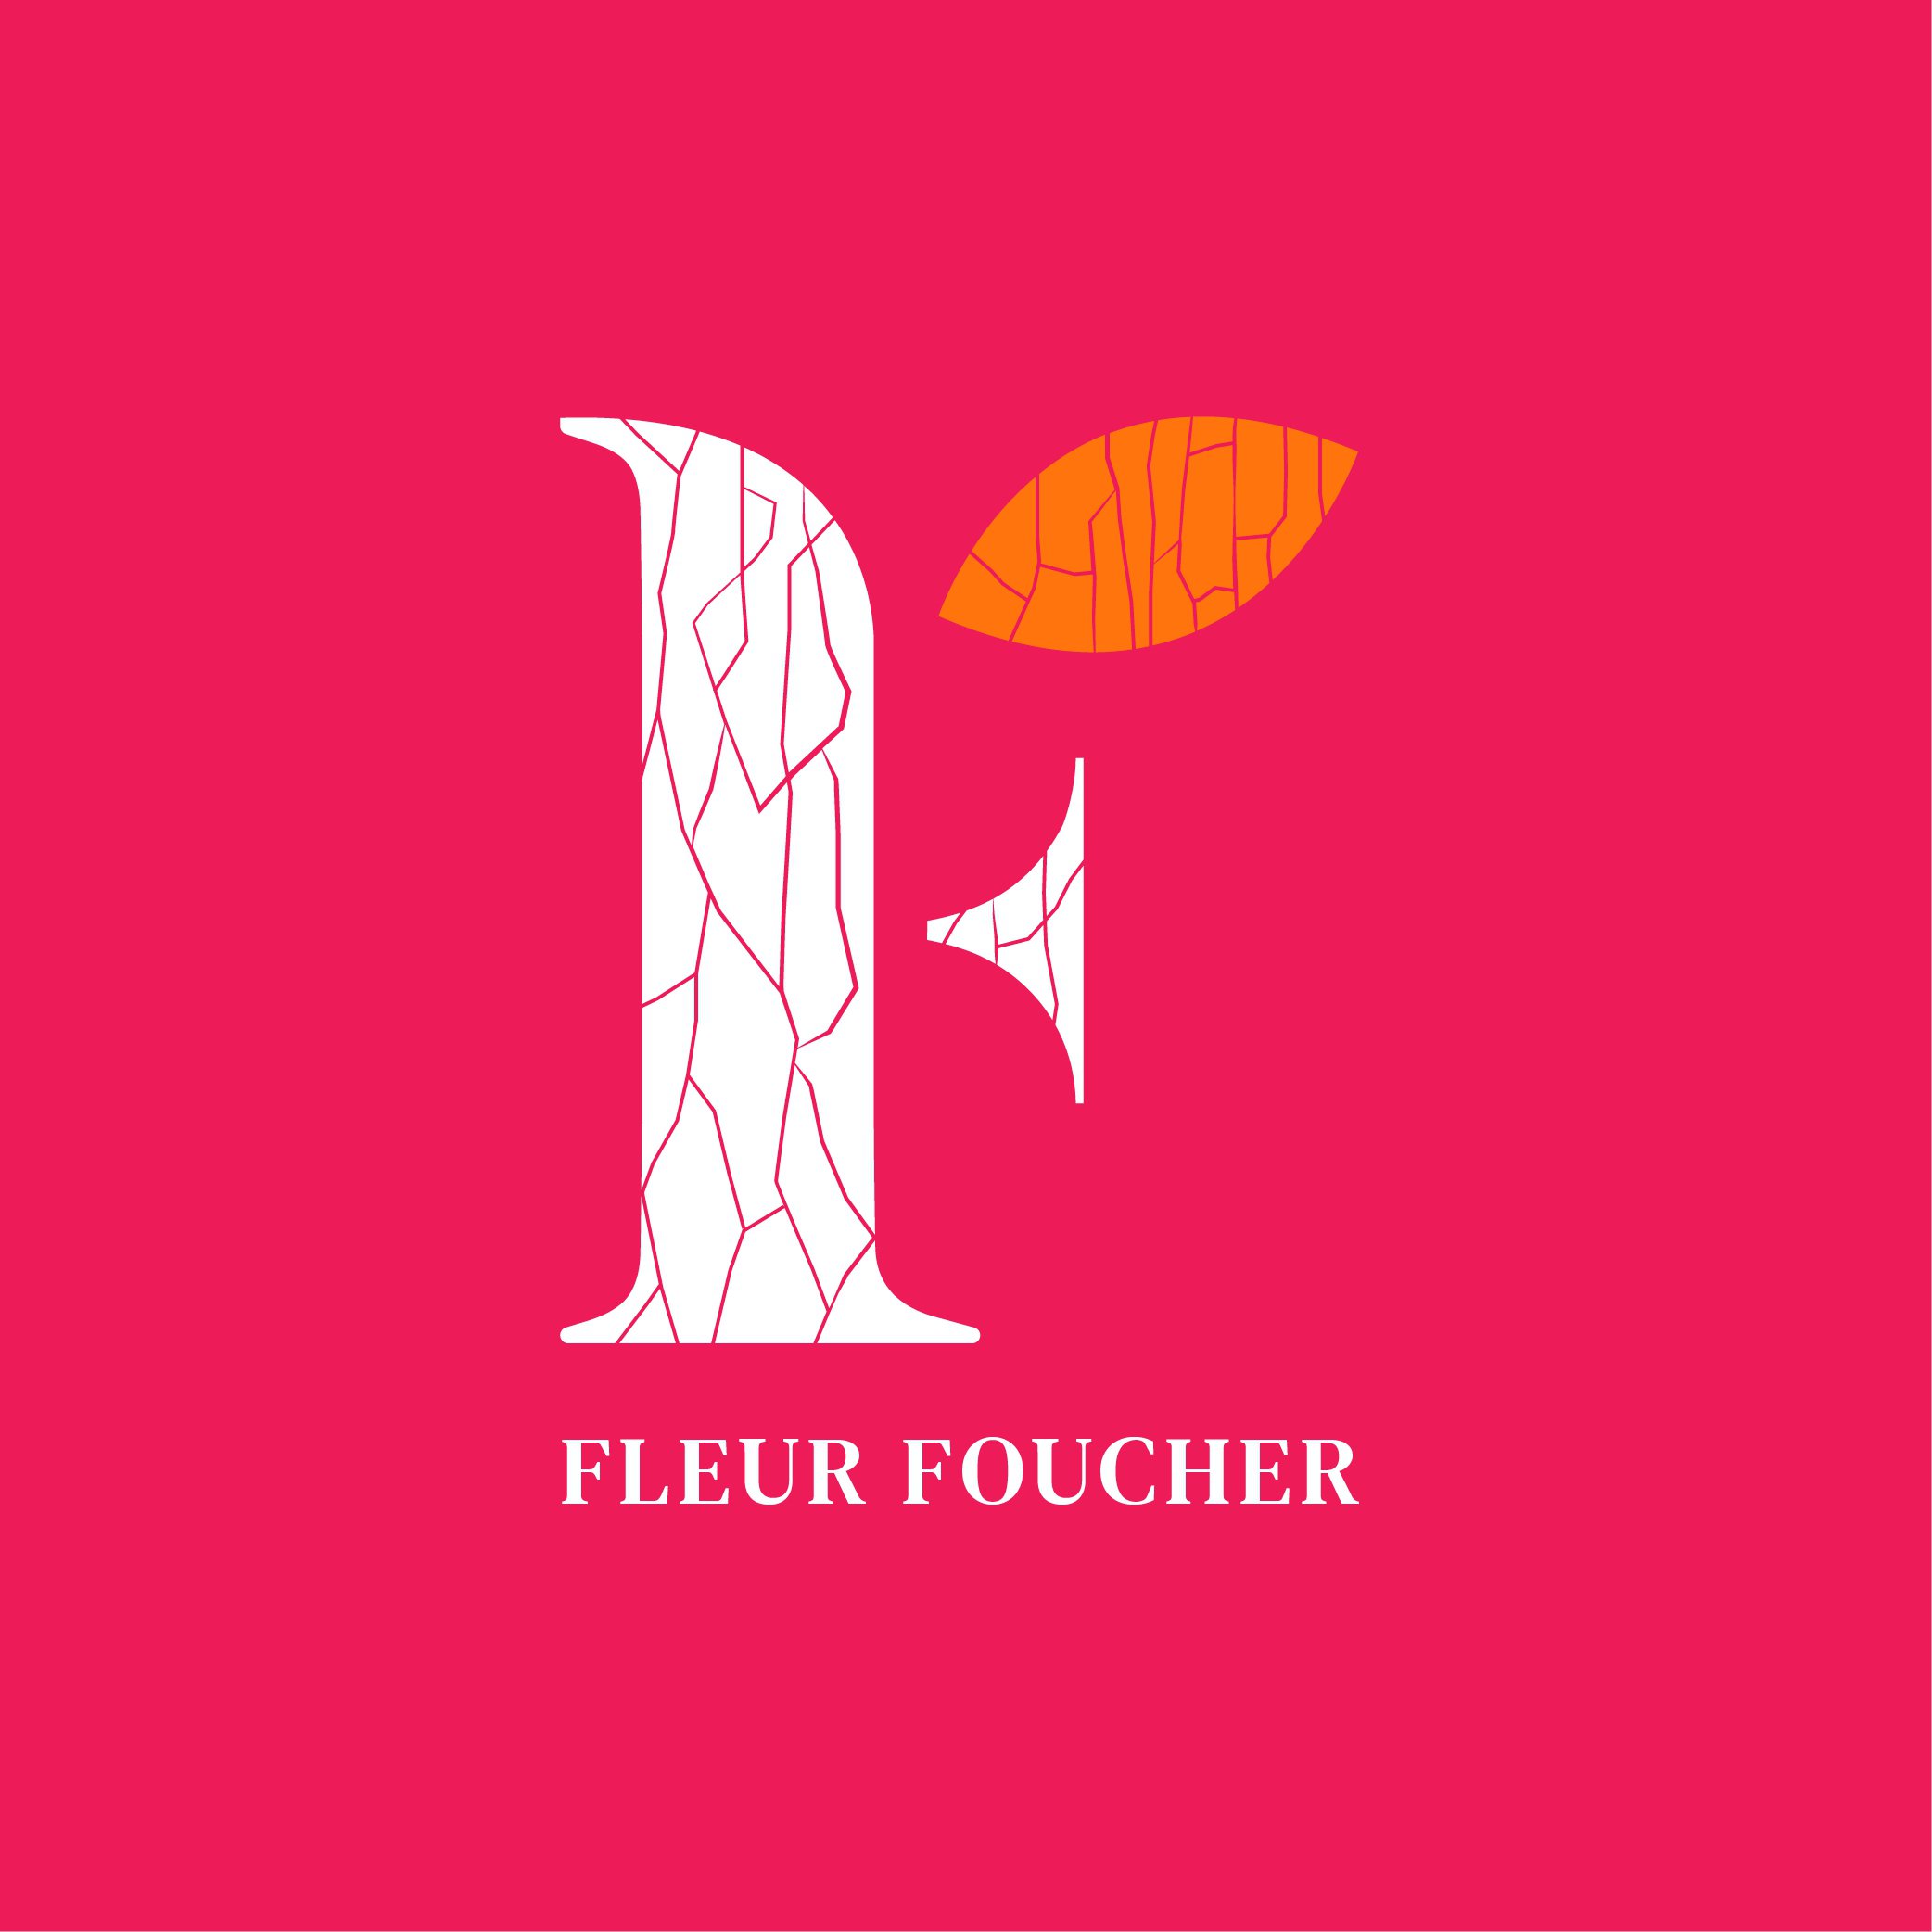 Fleur Foucher